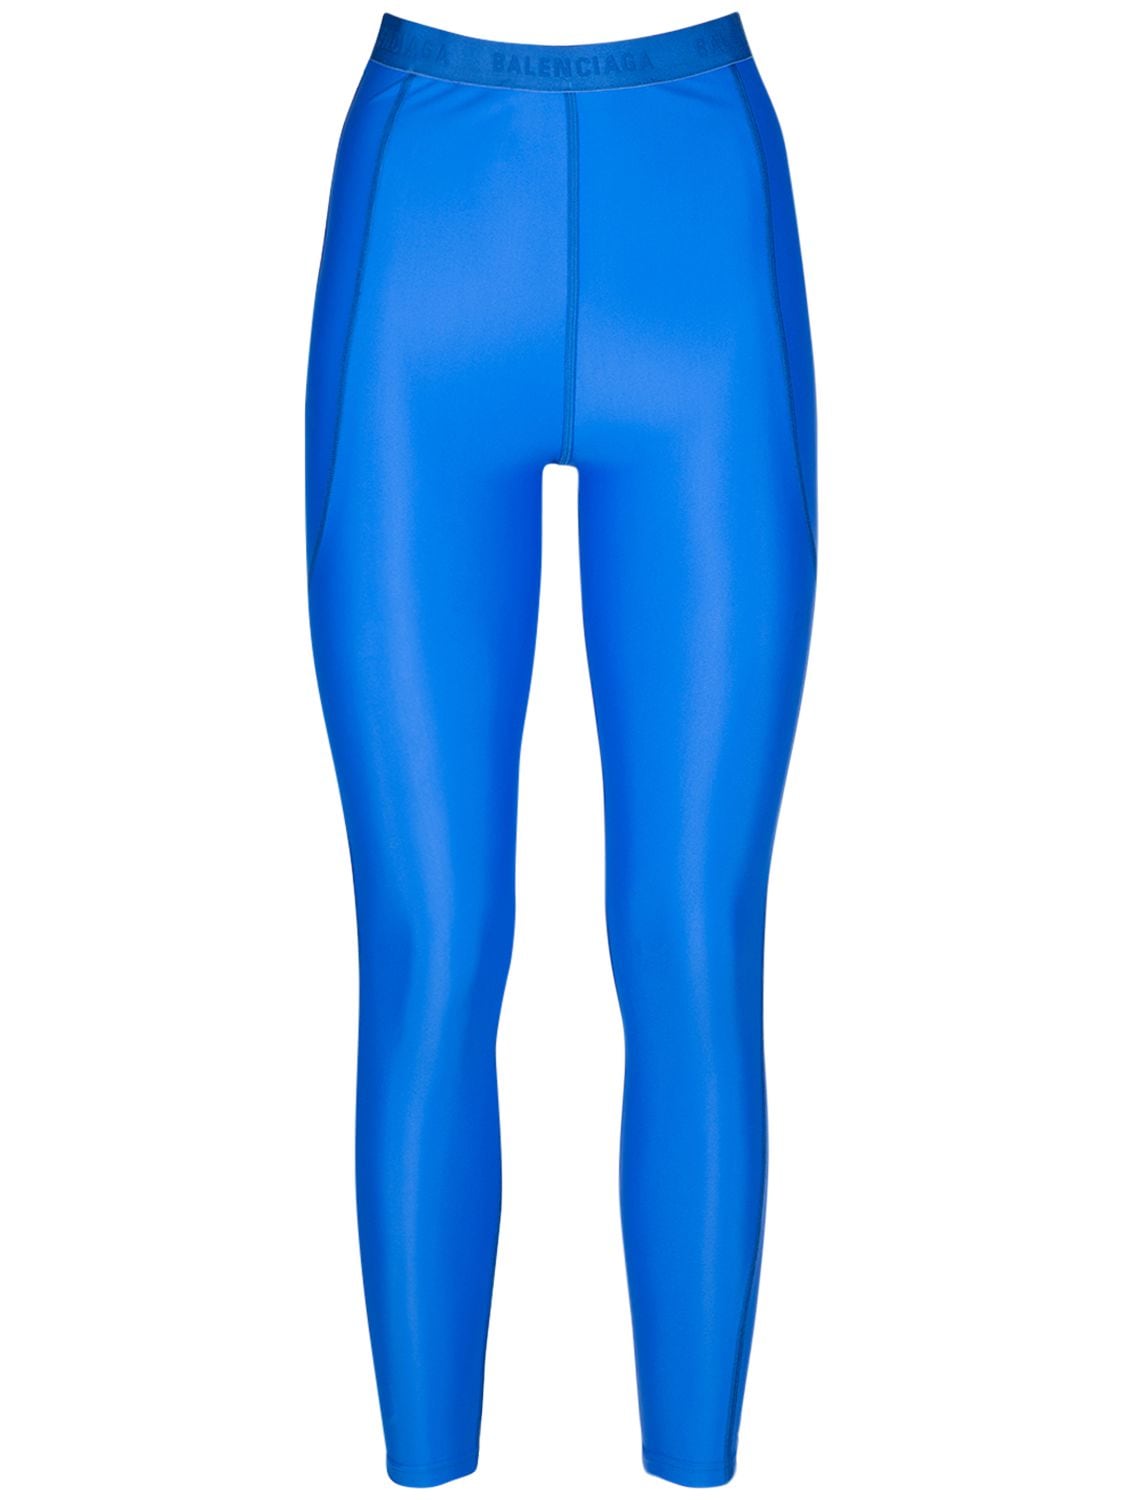 BALENCIAGA, Bright blue Women's Leggings